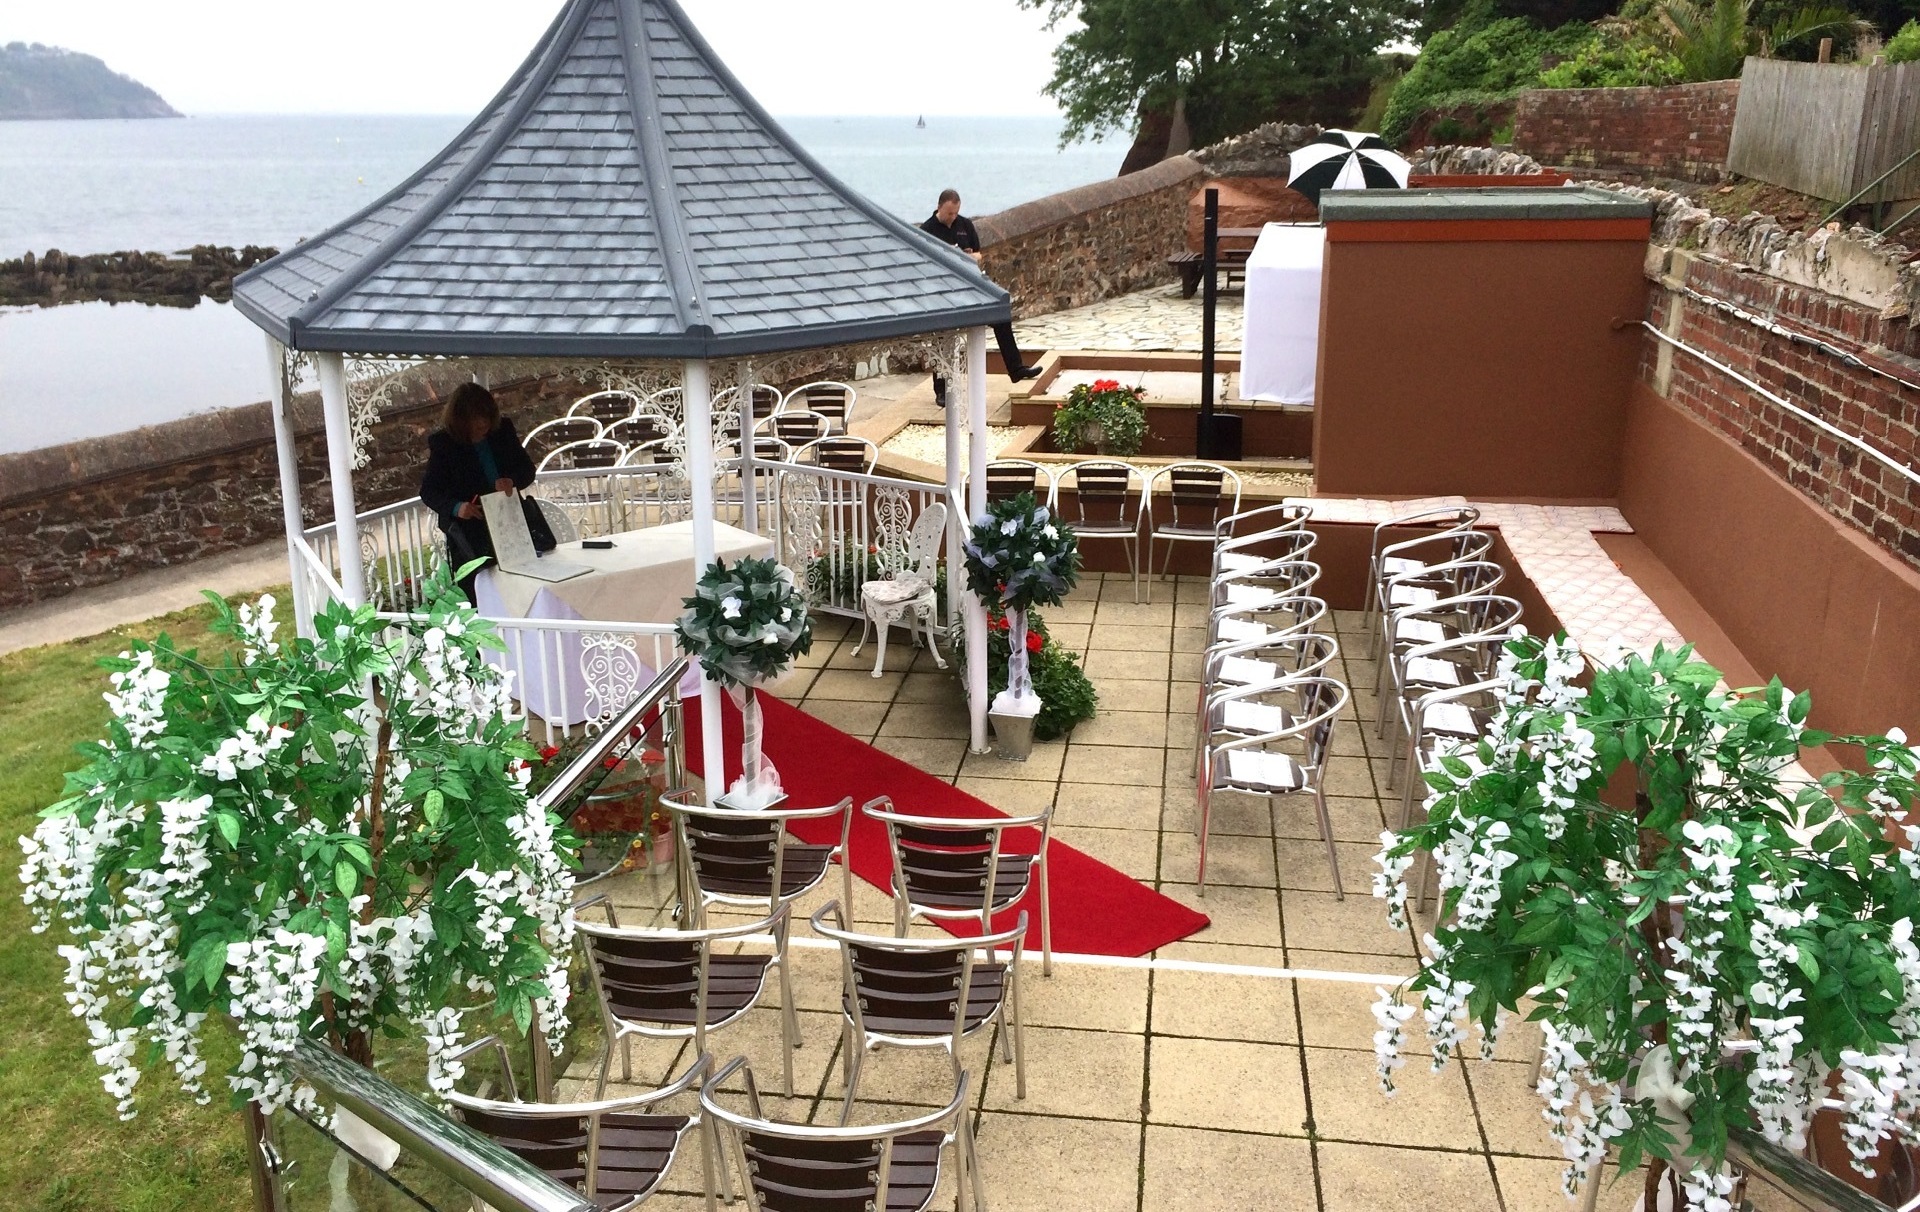 Wedding gazebo setup for a wedding ceremony outside on sun terrace